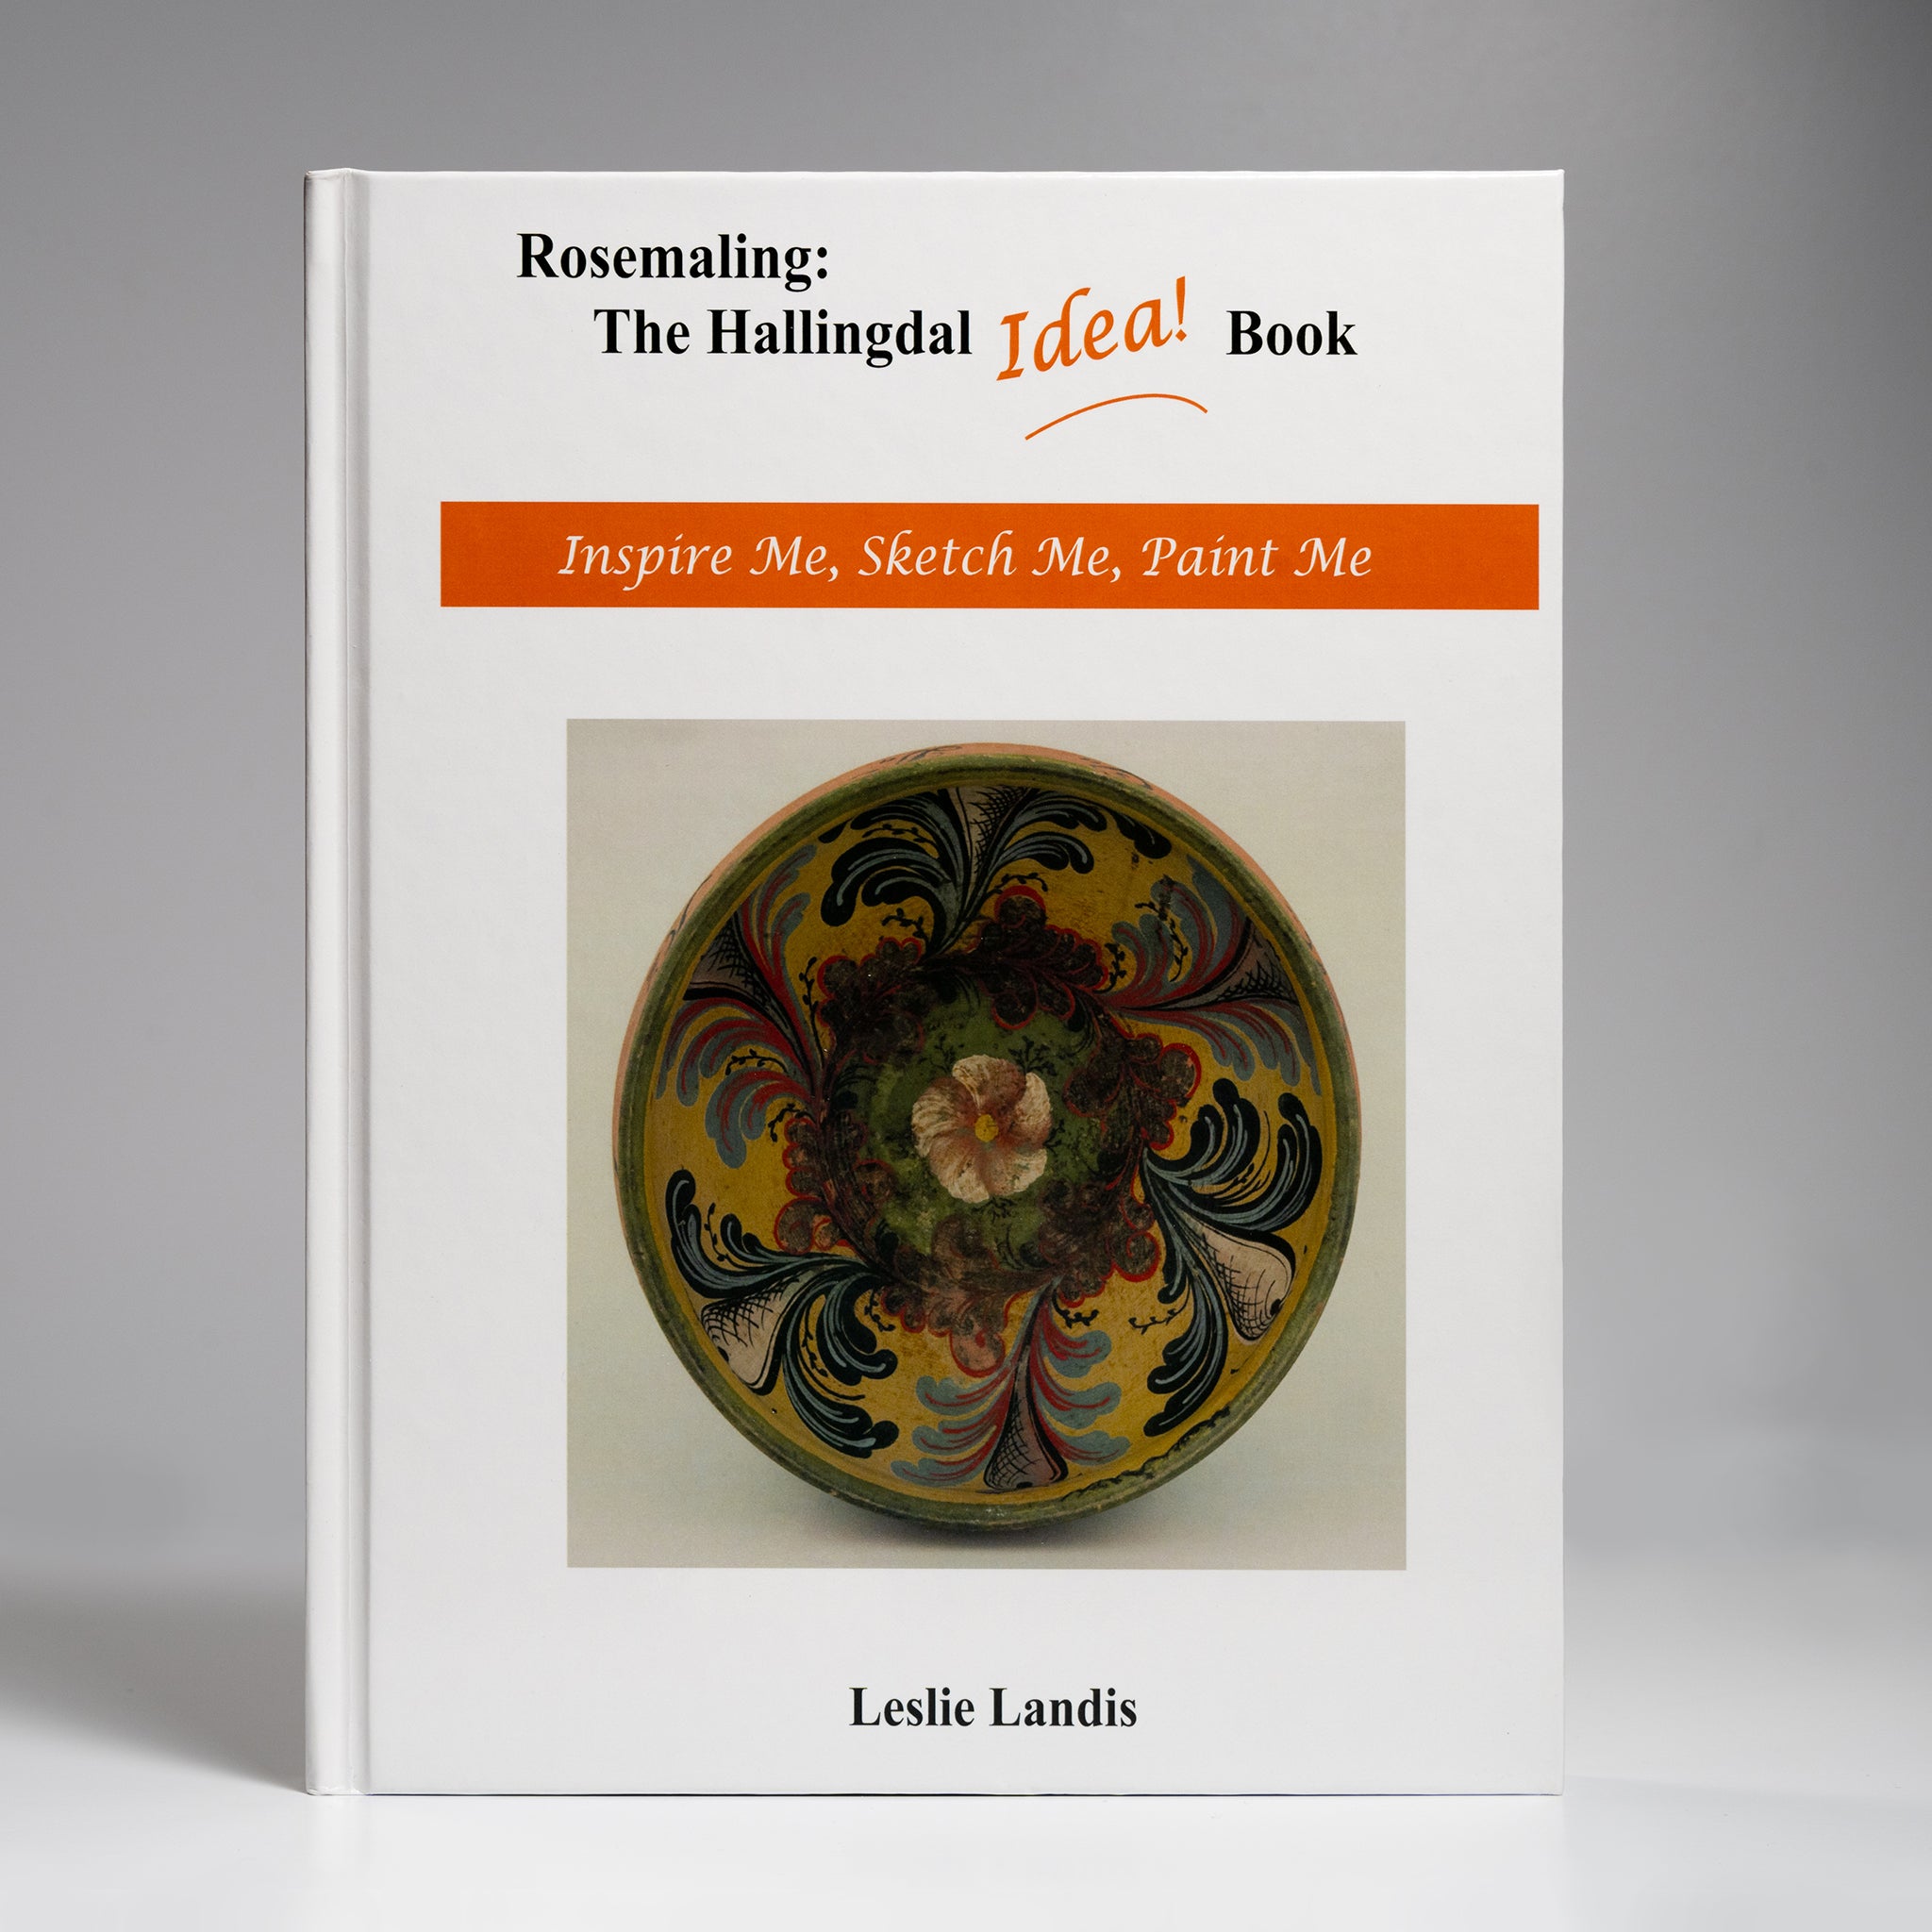 Rosemaling: The Hallingdal Idea Book by Leslie Landis